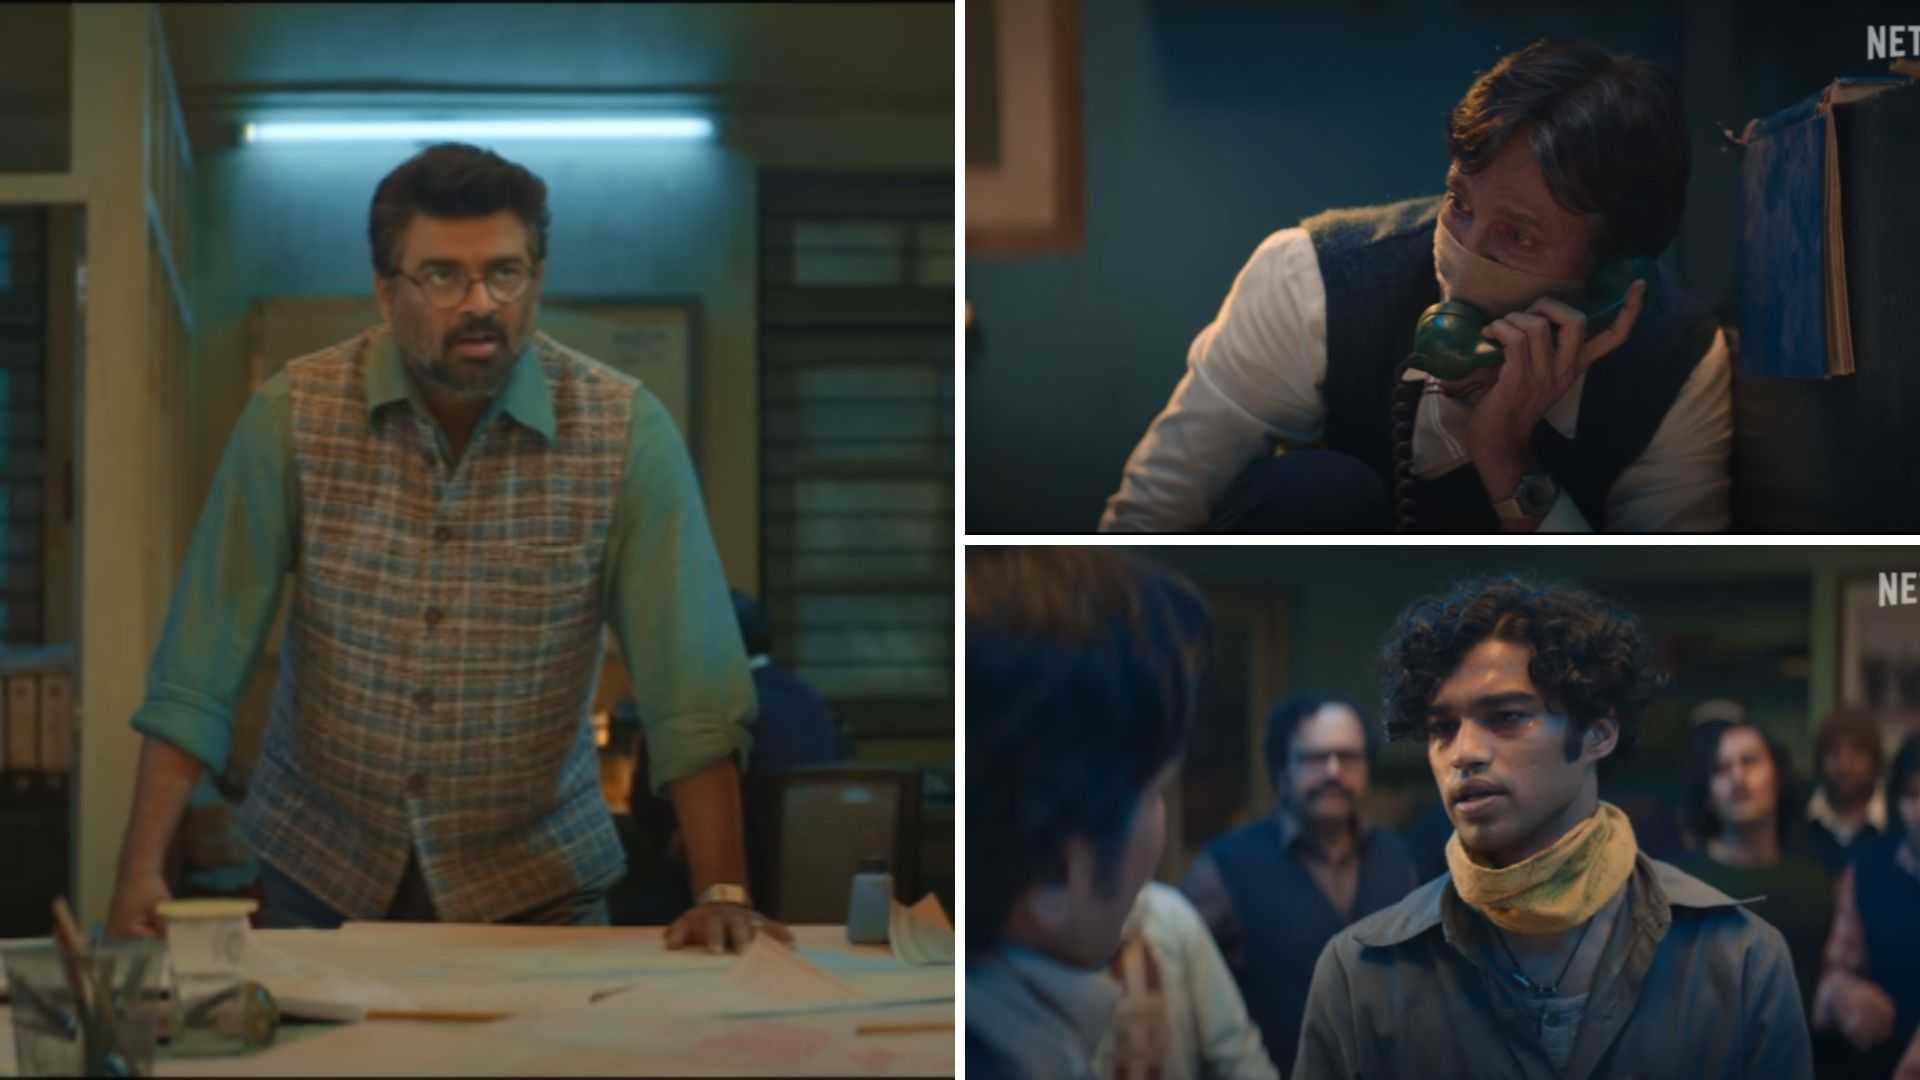 The Railway Men Trailer: R Madhavan & Babil Khan's series revolves around unsung heroes of Bhopal gas tragedy, fans react